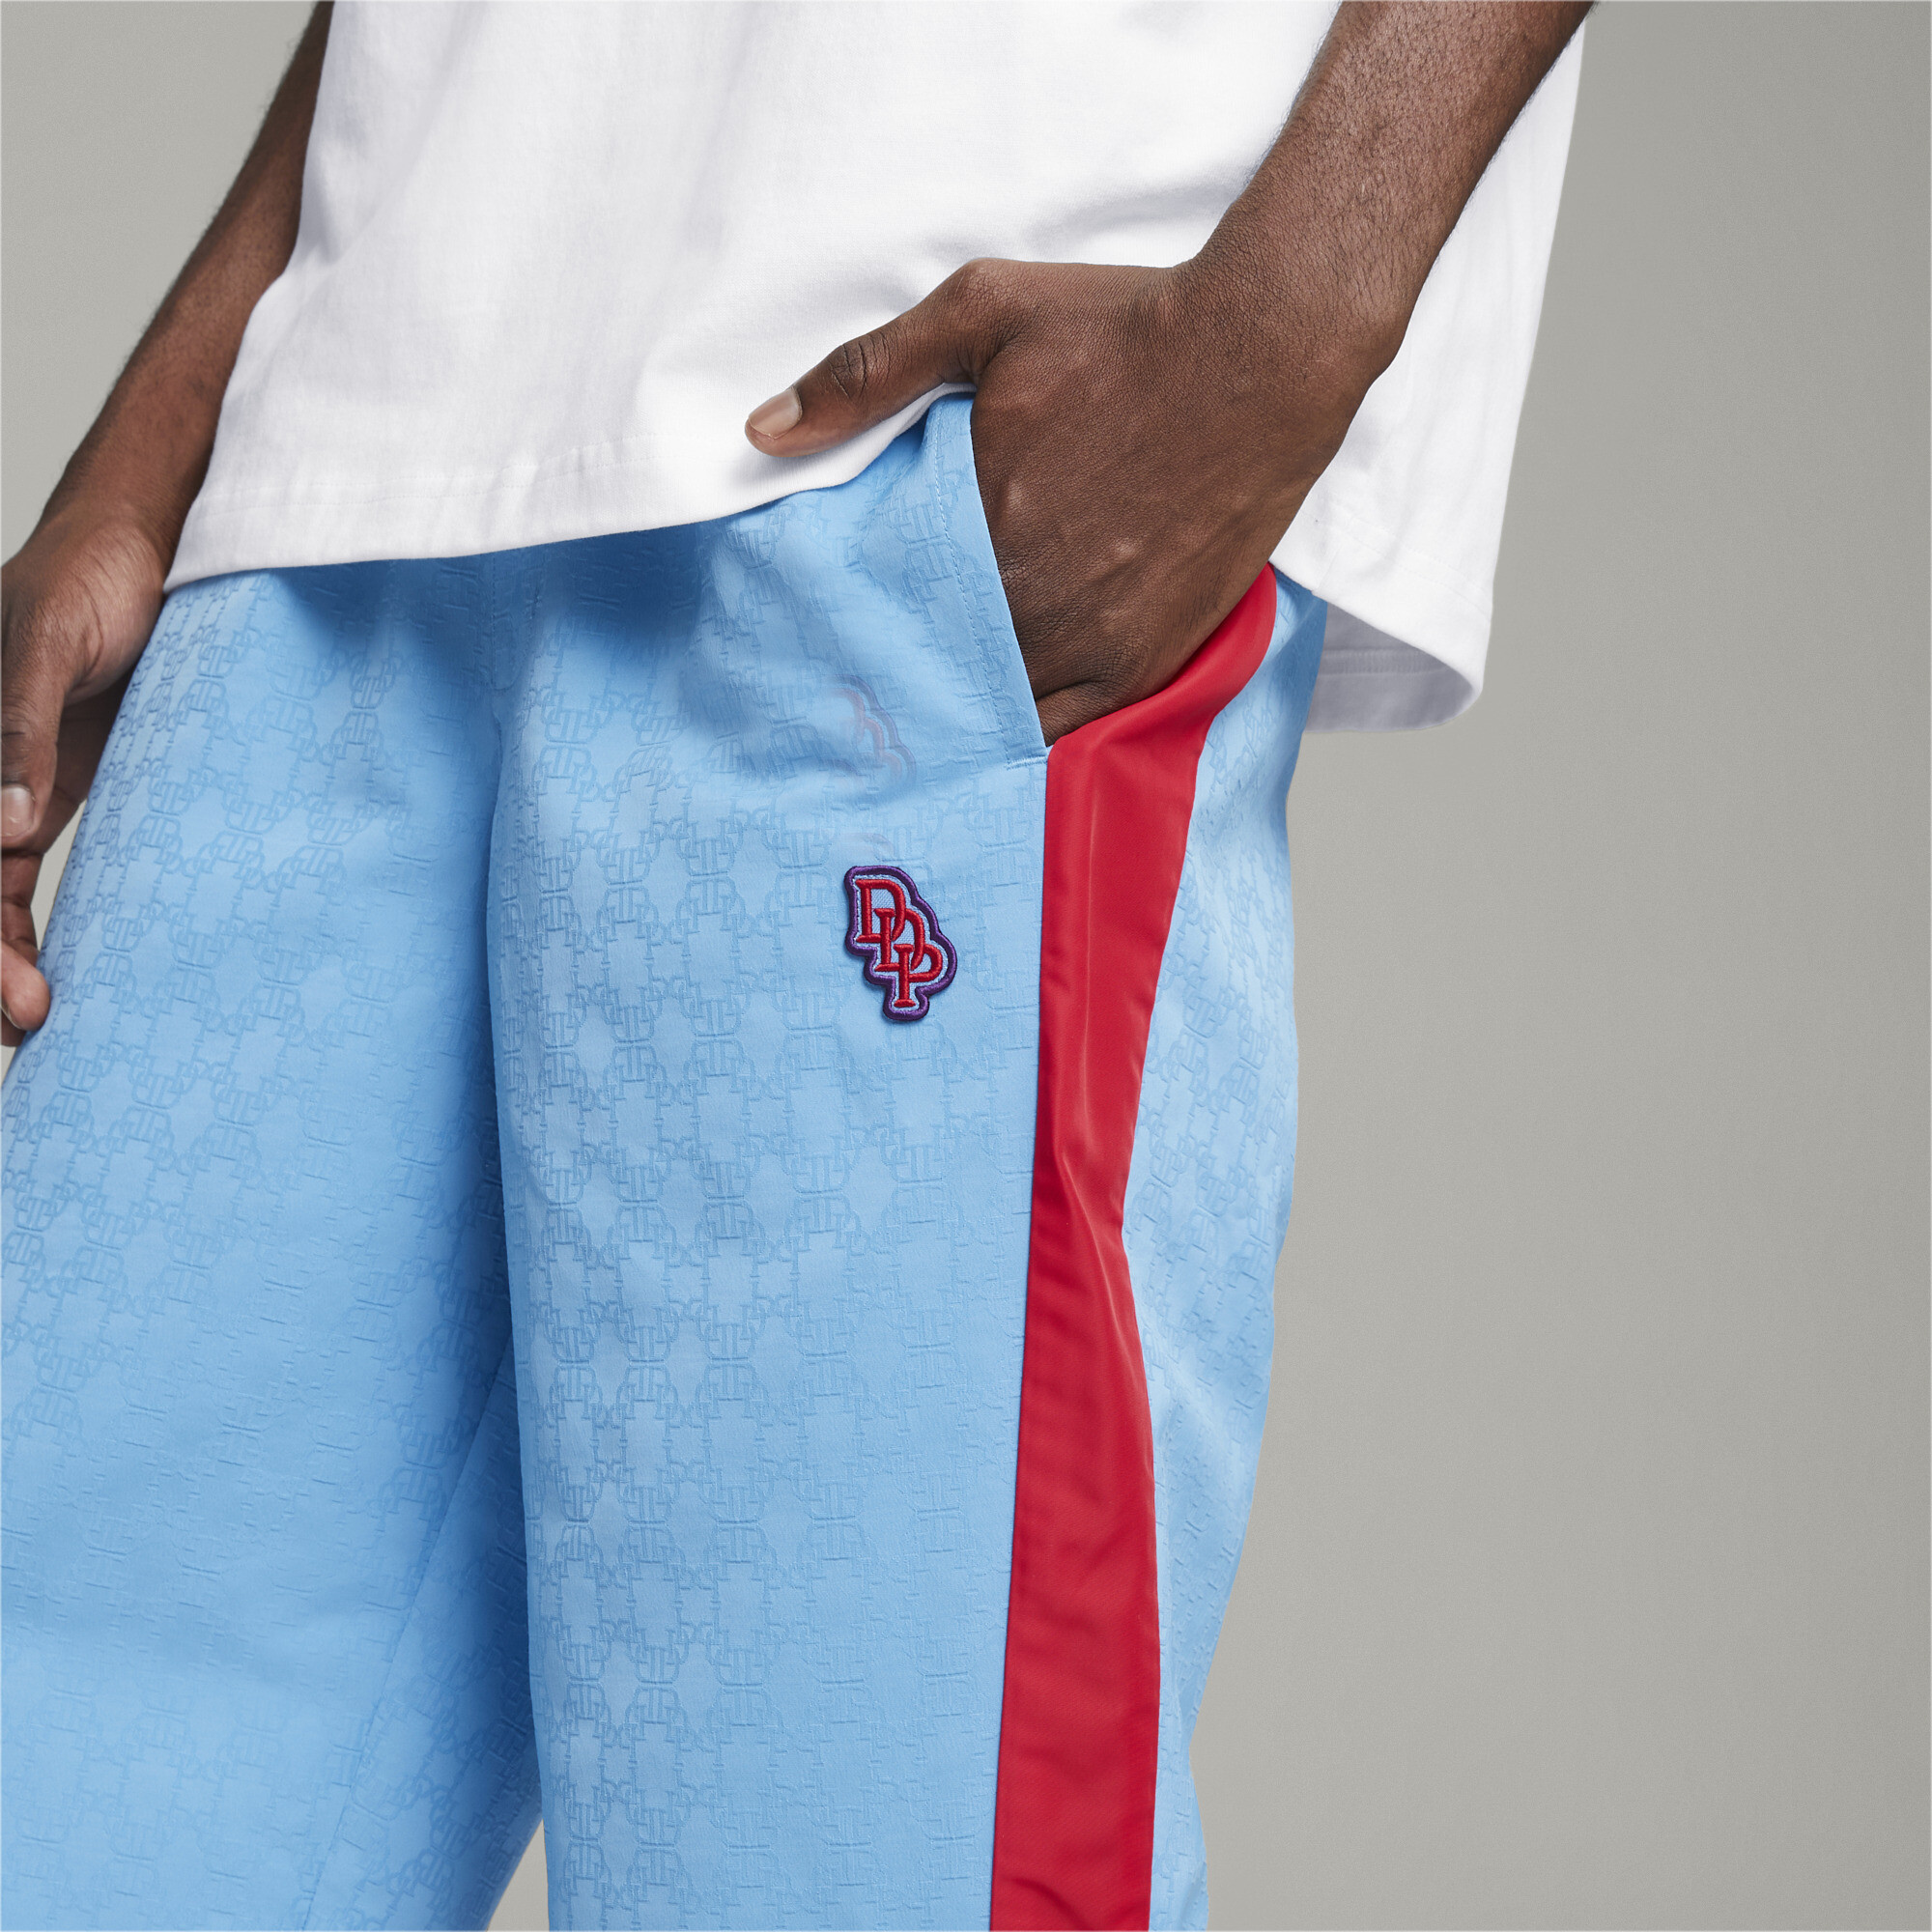 Men's PUMA X DAPPER DAN T7 Pants In Blue, Size Medium